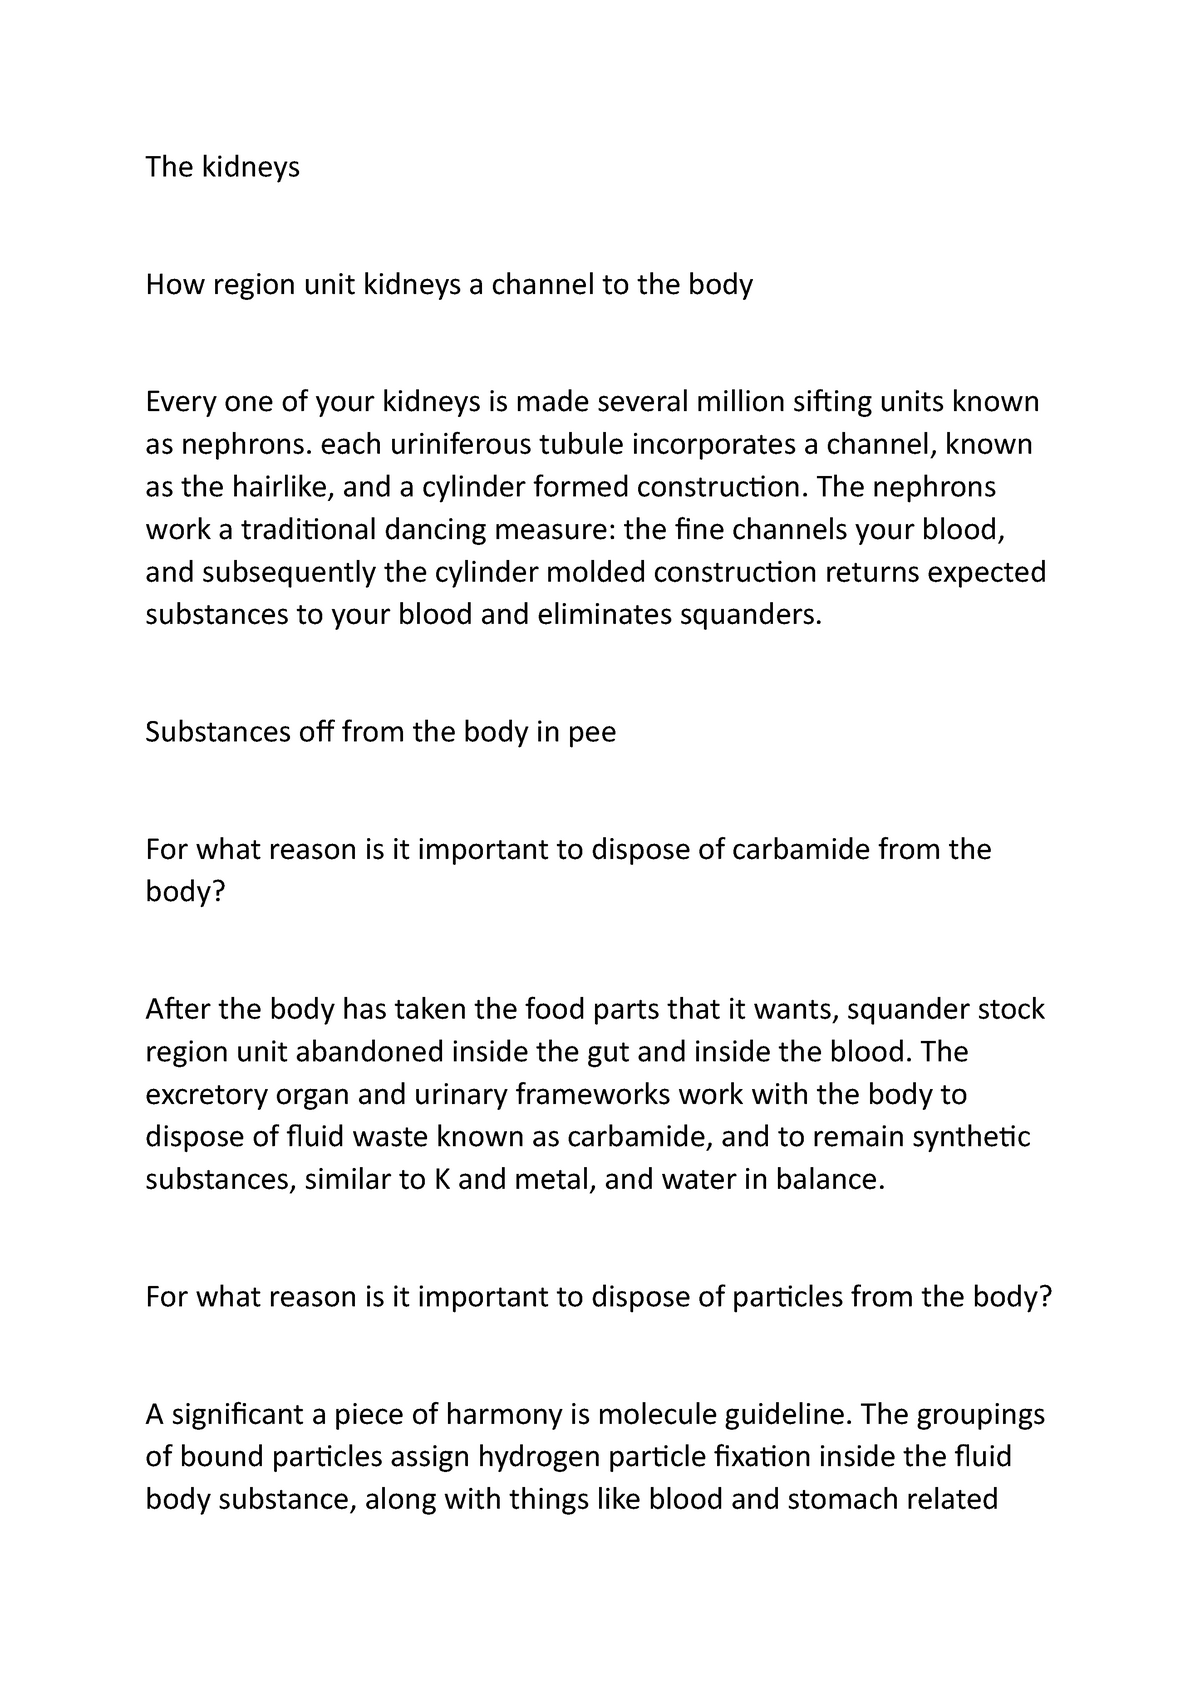 The kidneys - NOTES on GCSE - The kidneys How region unit kidneys a ...